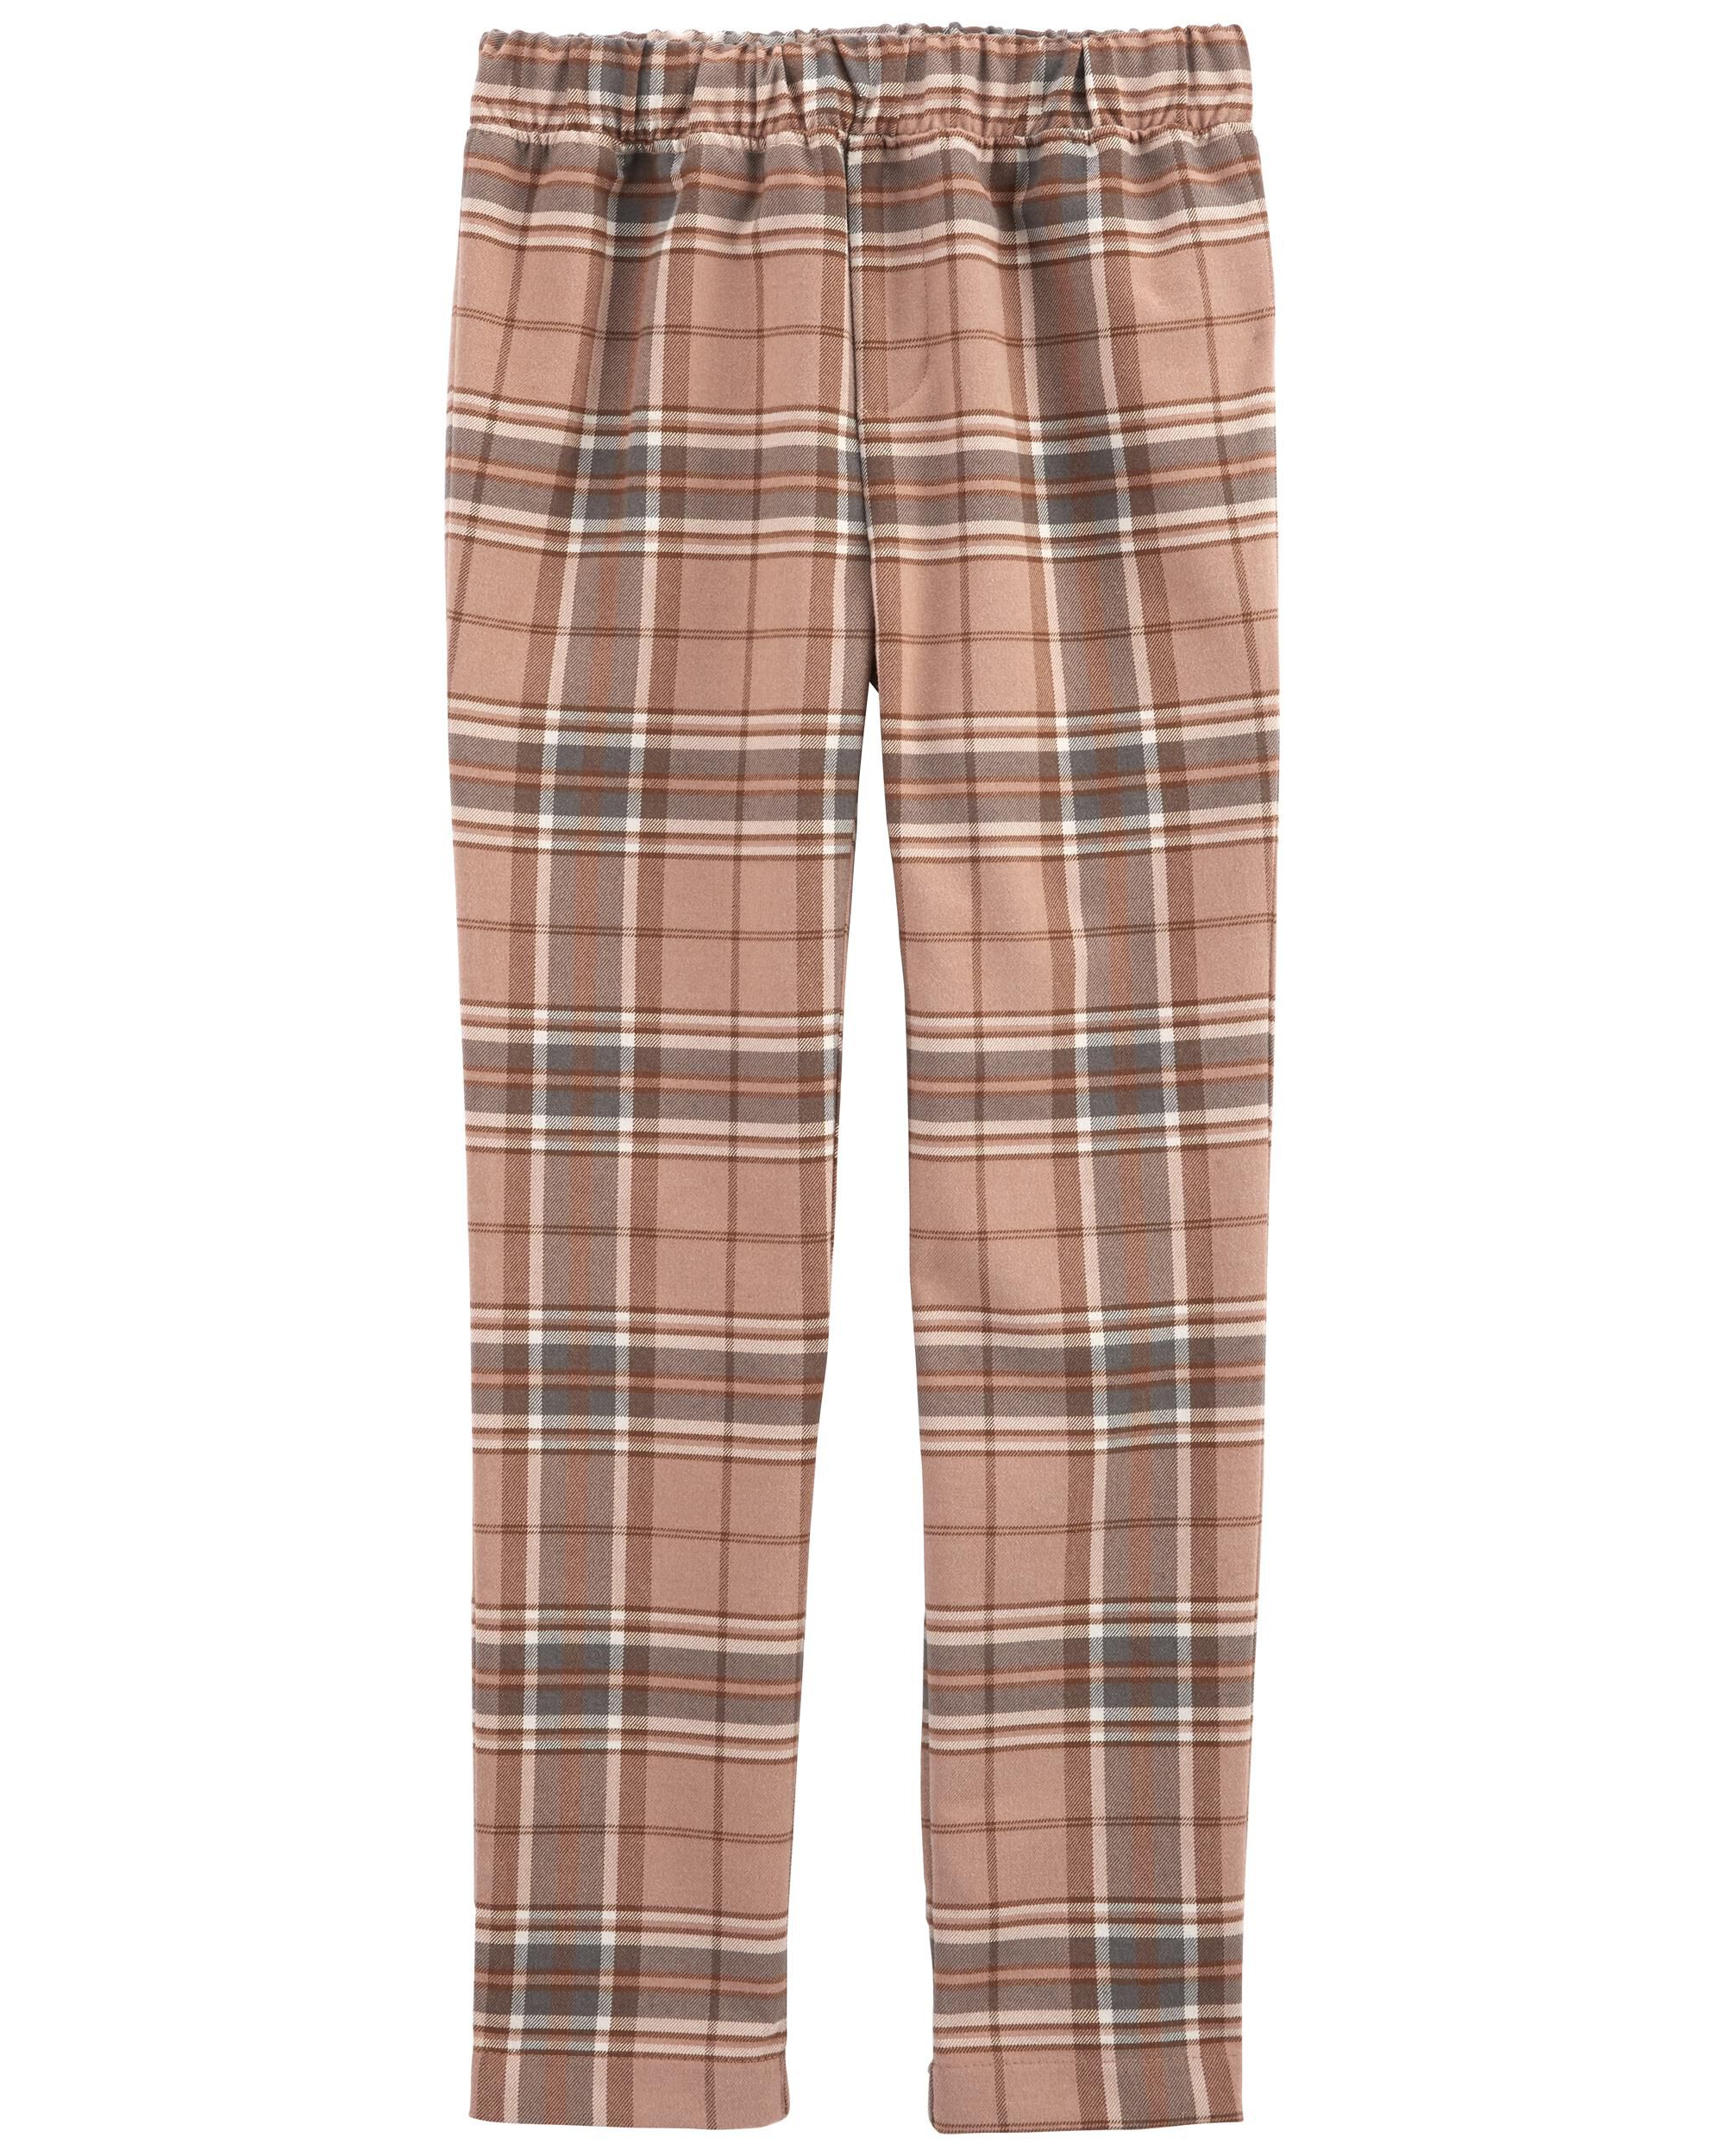 Checkered Plaid Trouser Pants 7a0028